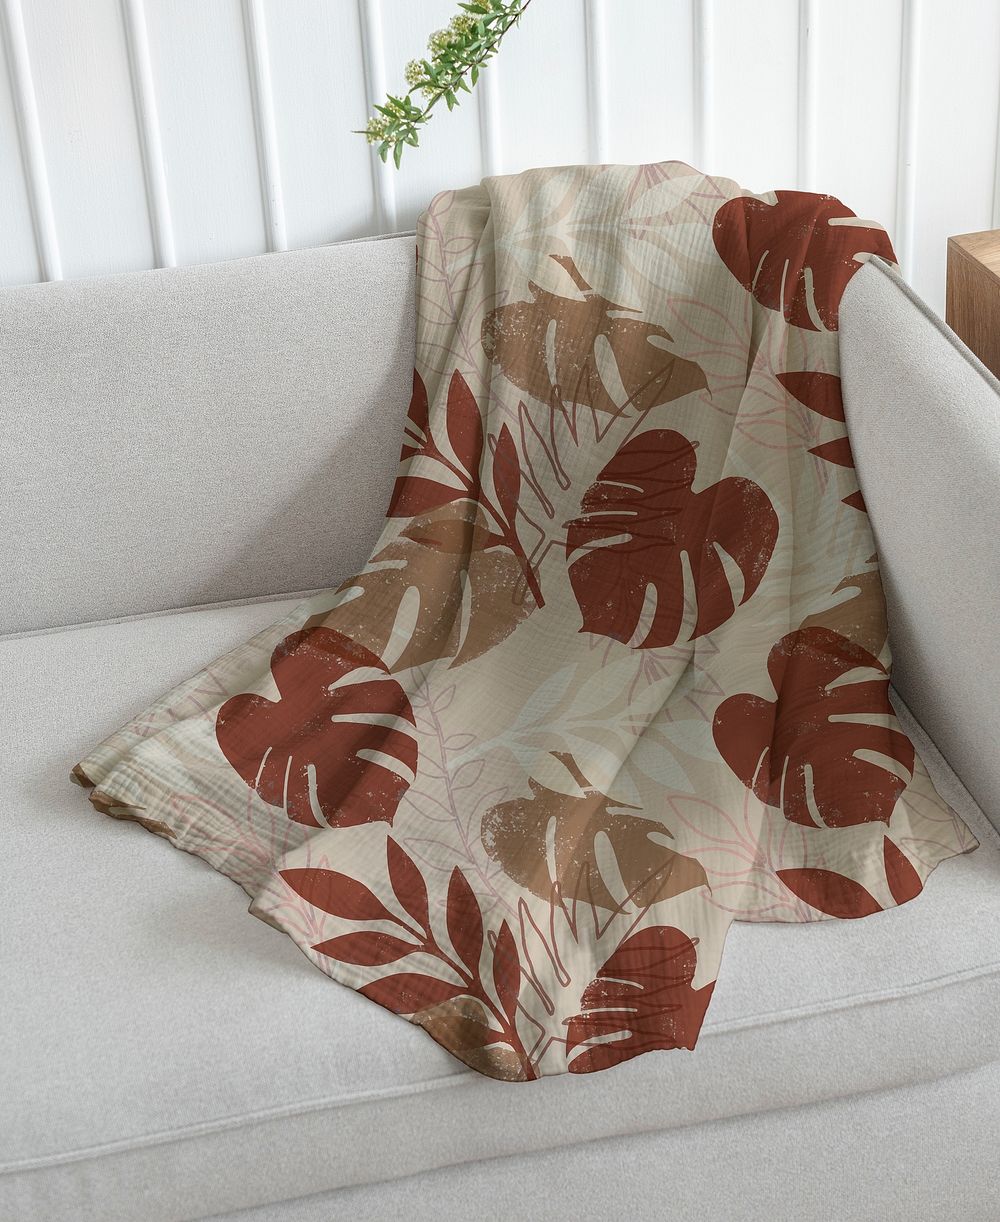 Botanical throw blanket, home decor in earth tone design